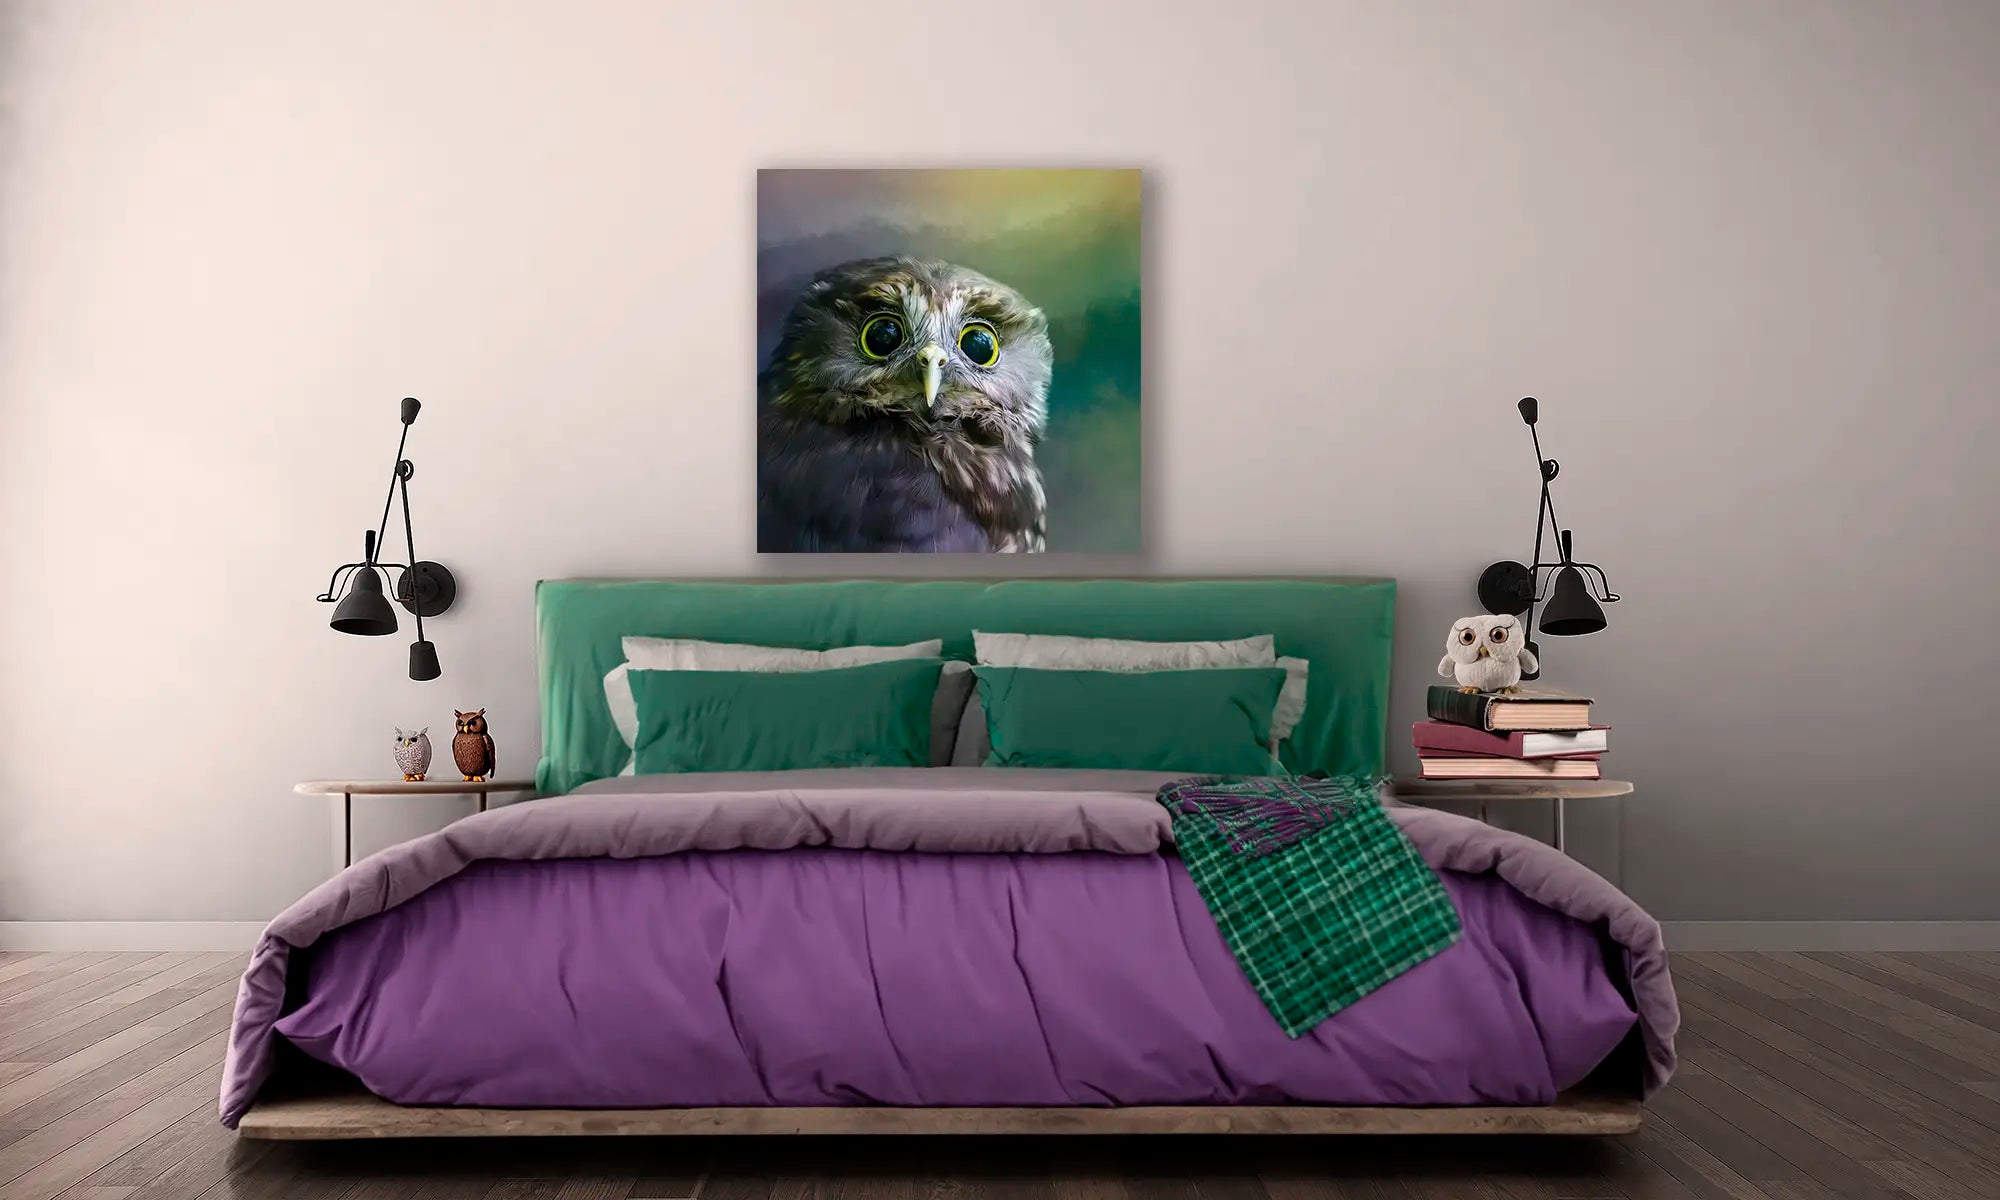 ruru morepork owl painting with huge eyes above a bed